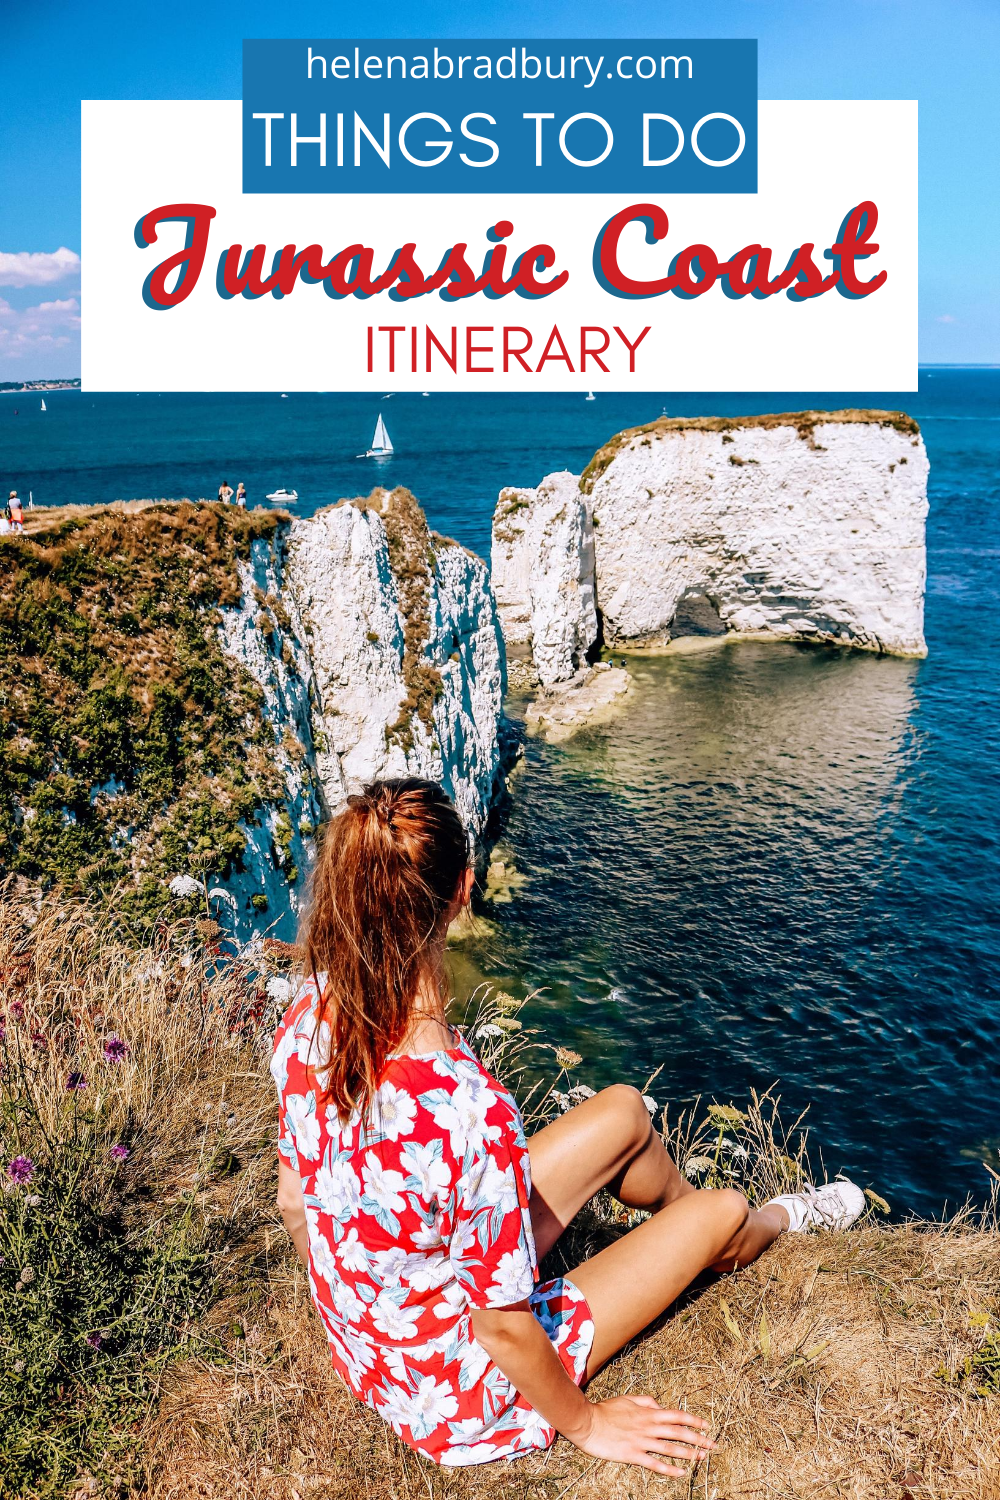 Things to do in South Dorset on a Jurassic Coast itinerary | Helena Bradbury travel blog | south dorset england | uk dorset, jurassic coast uk | visiting jurassic coast dorset | jurassic coast highlights | dorset itinerary | england travel | jurassi…